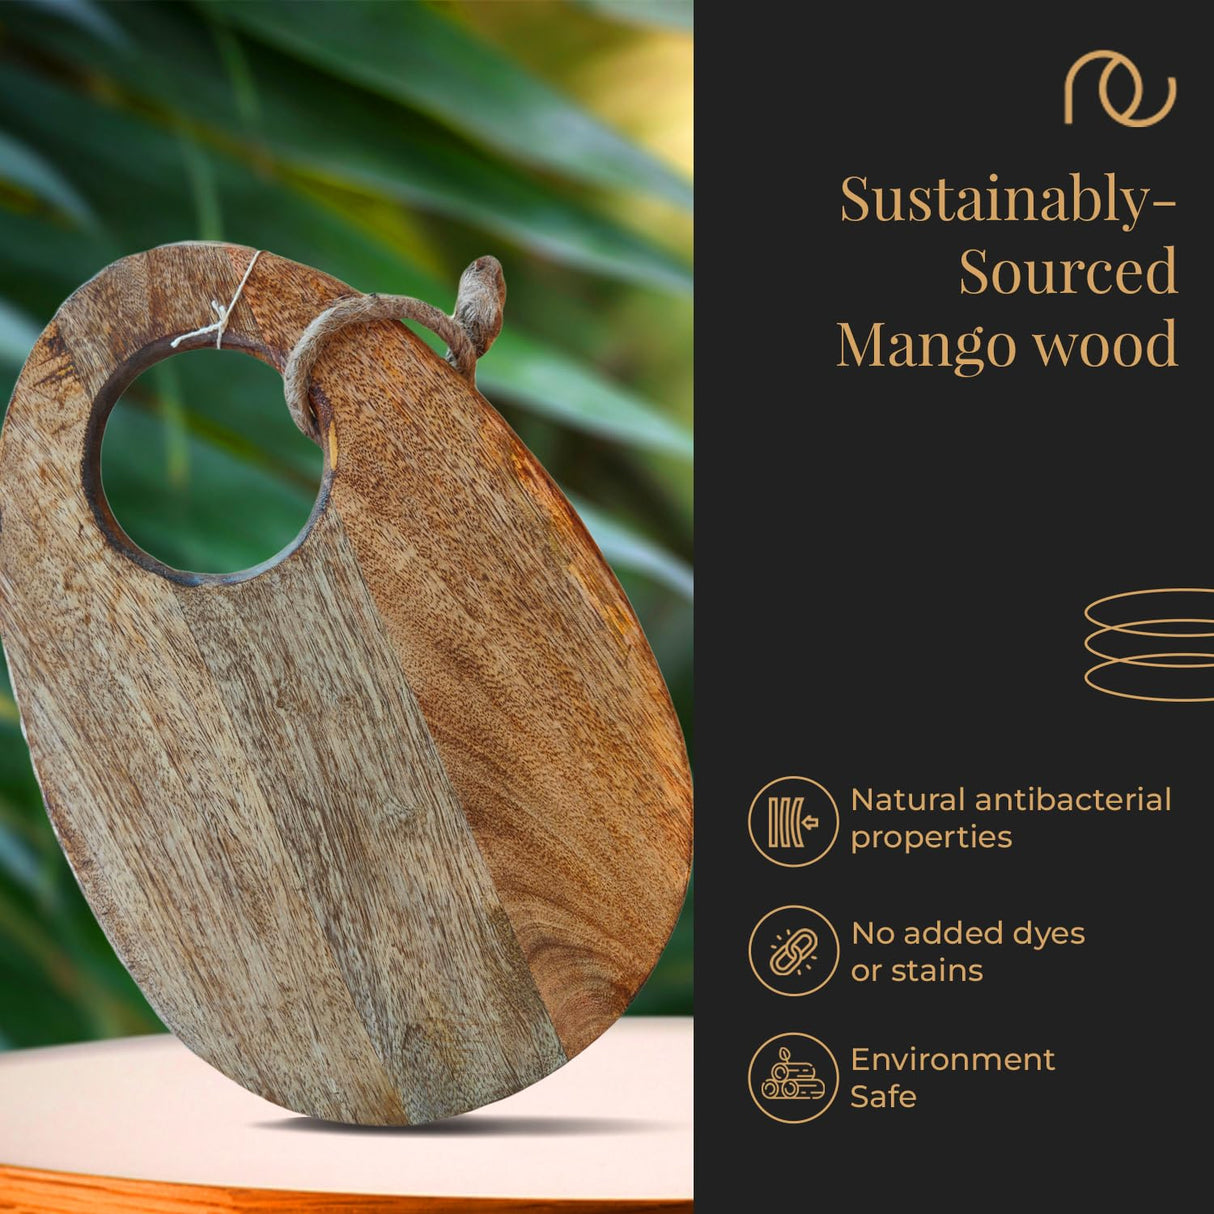 Frenchware Mango Wood Chopping Board (Oval)